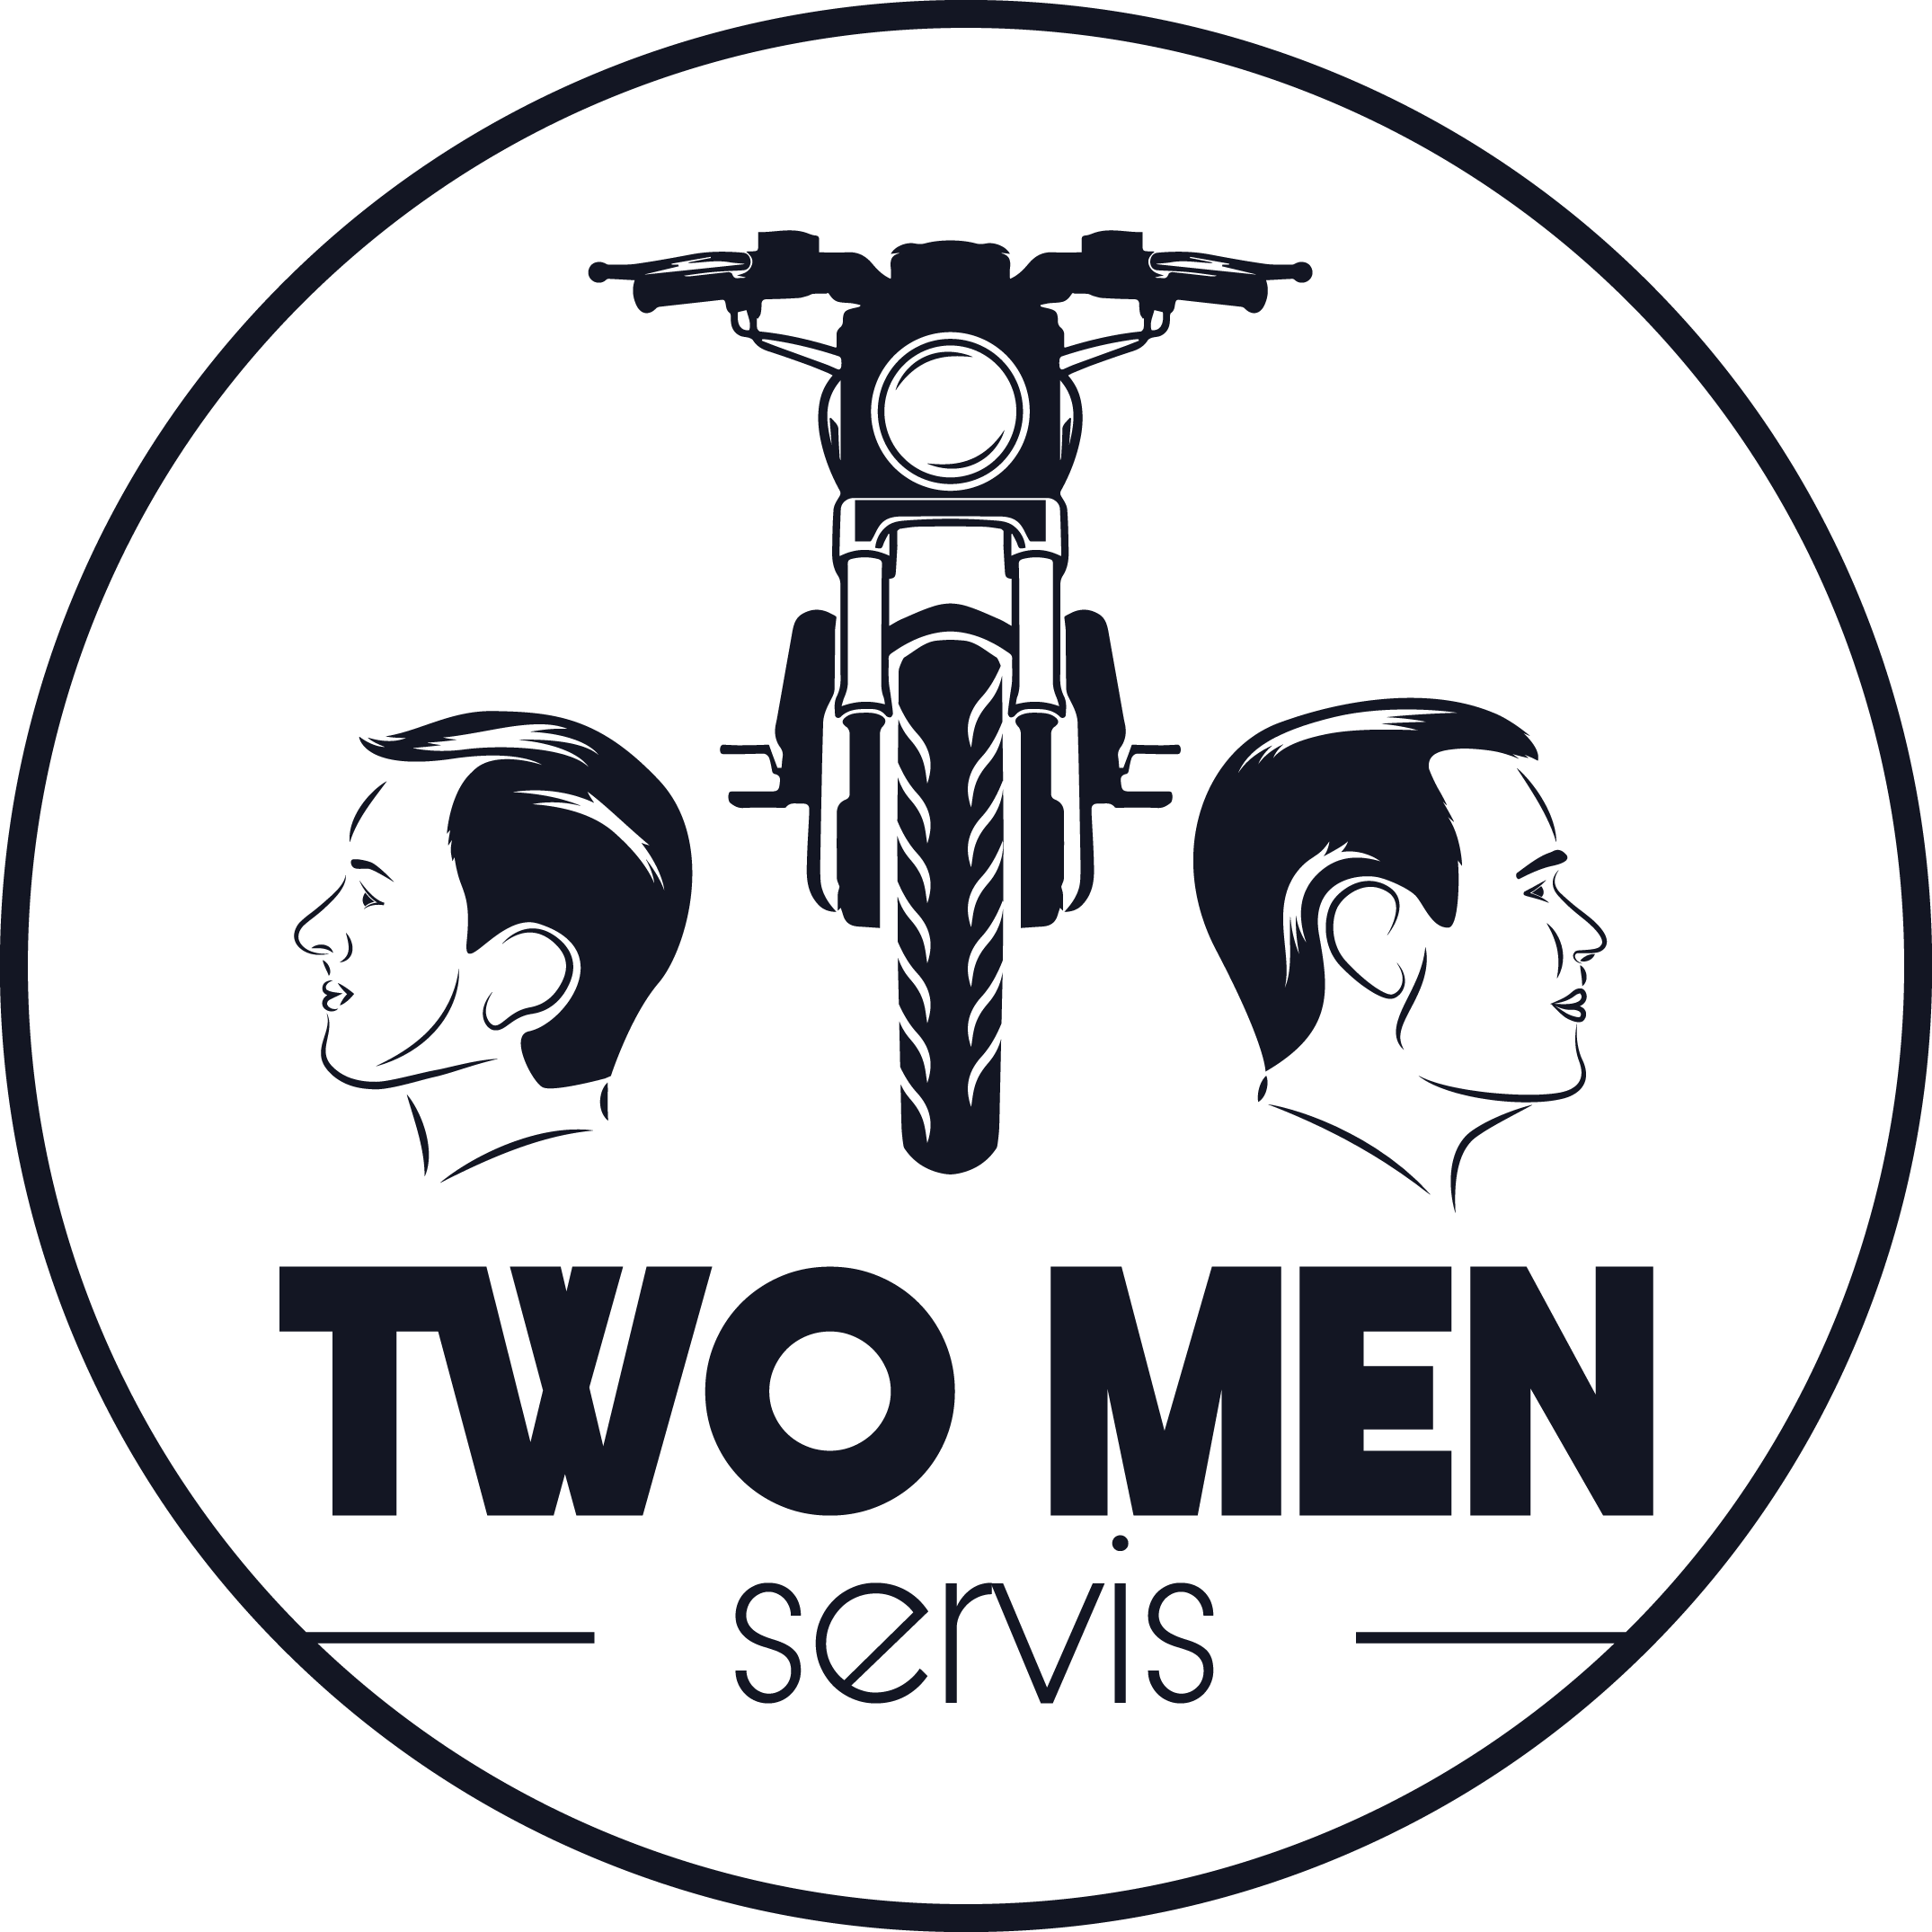 TWO MEN servis